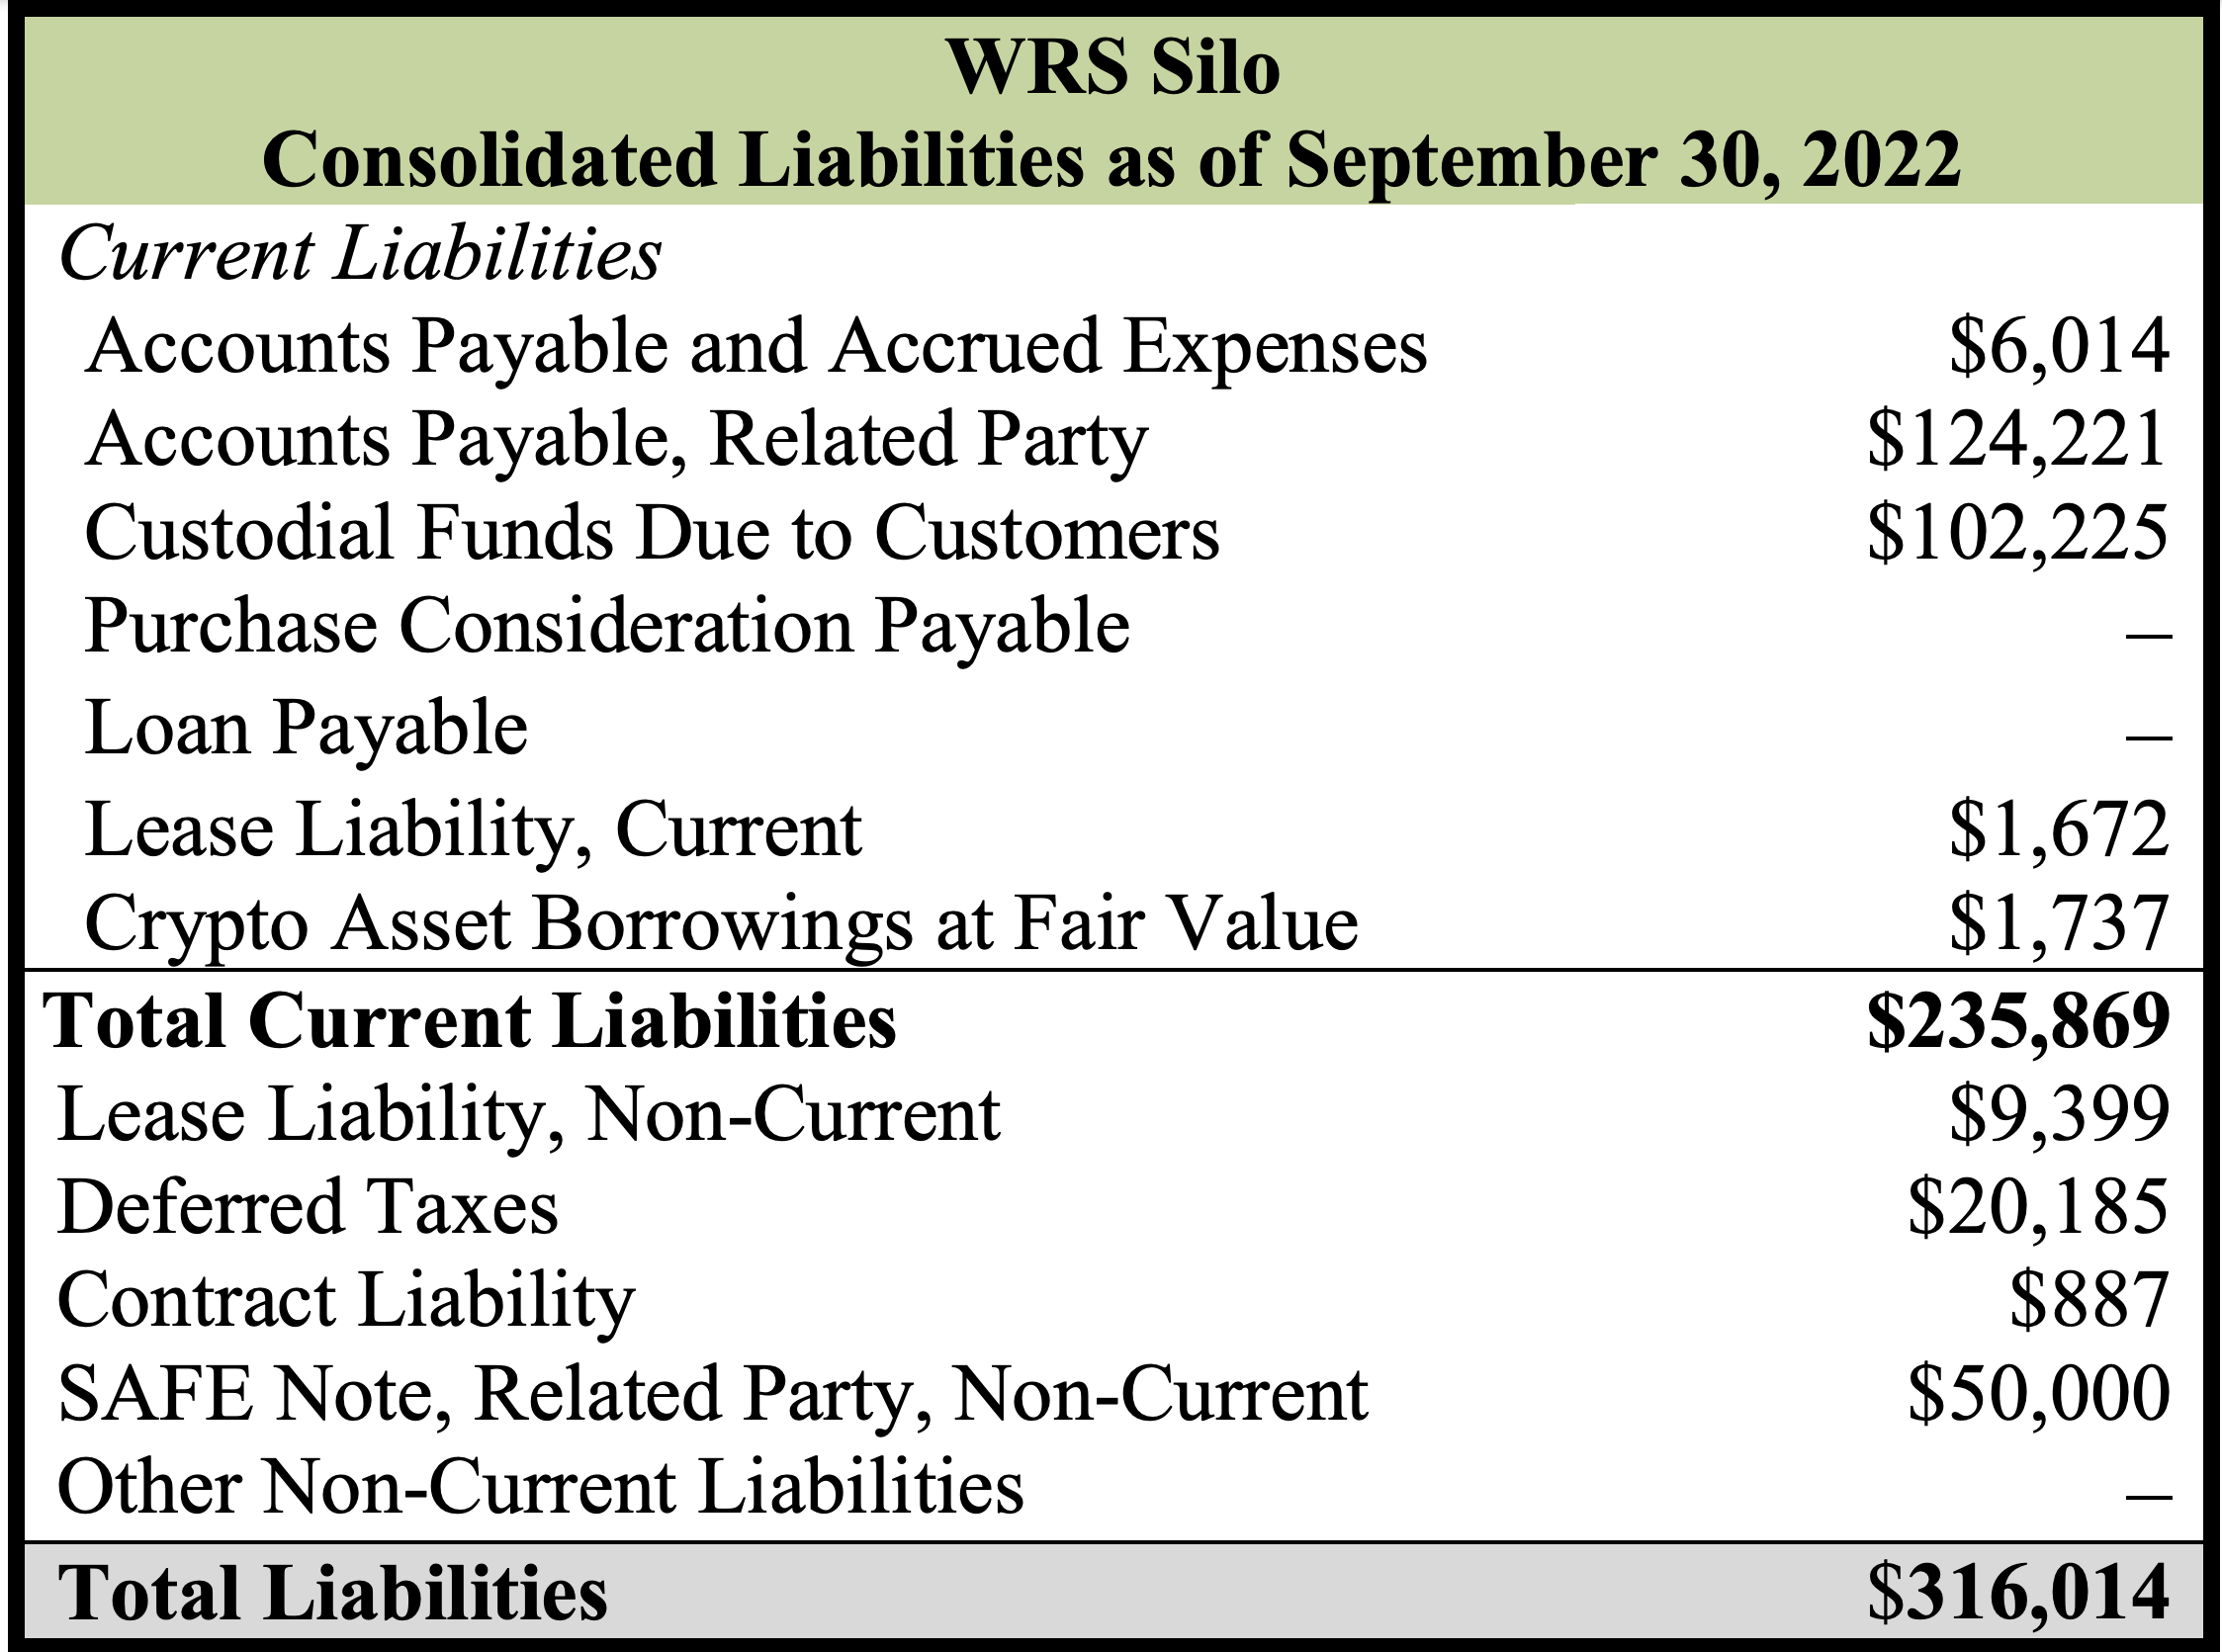 WRS Silo Balance Sheet - Total Liabilities as of Sept 30, 2022